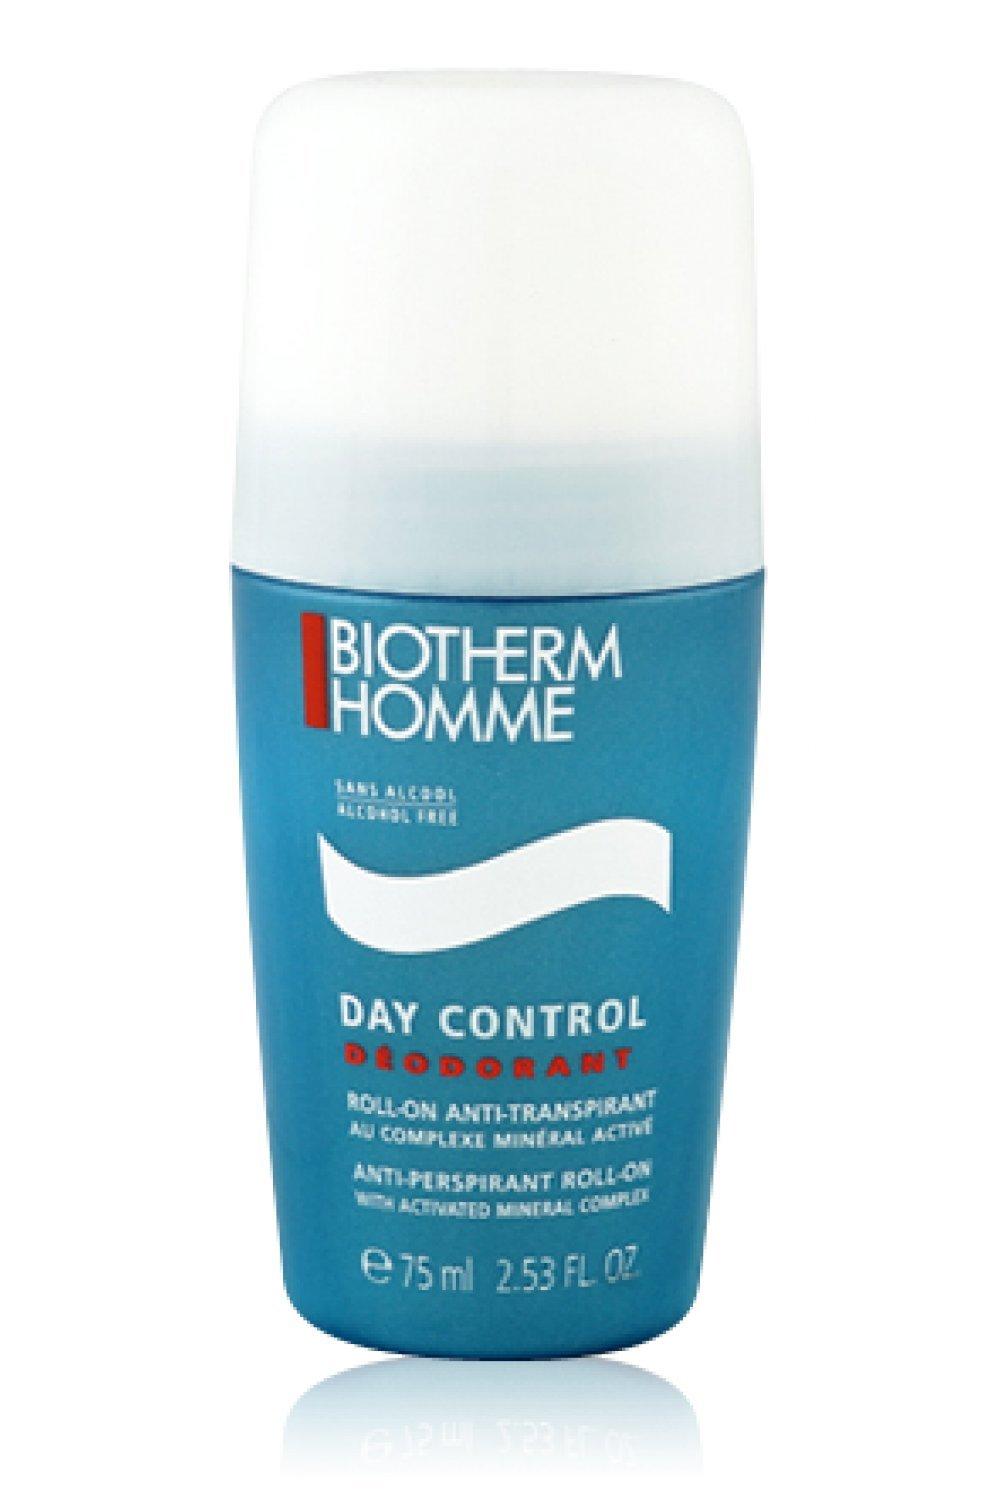 BIOTHERM Day control Day Control 48h Deodorant -  Antitranspirant Dep Roll-On 